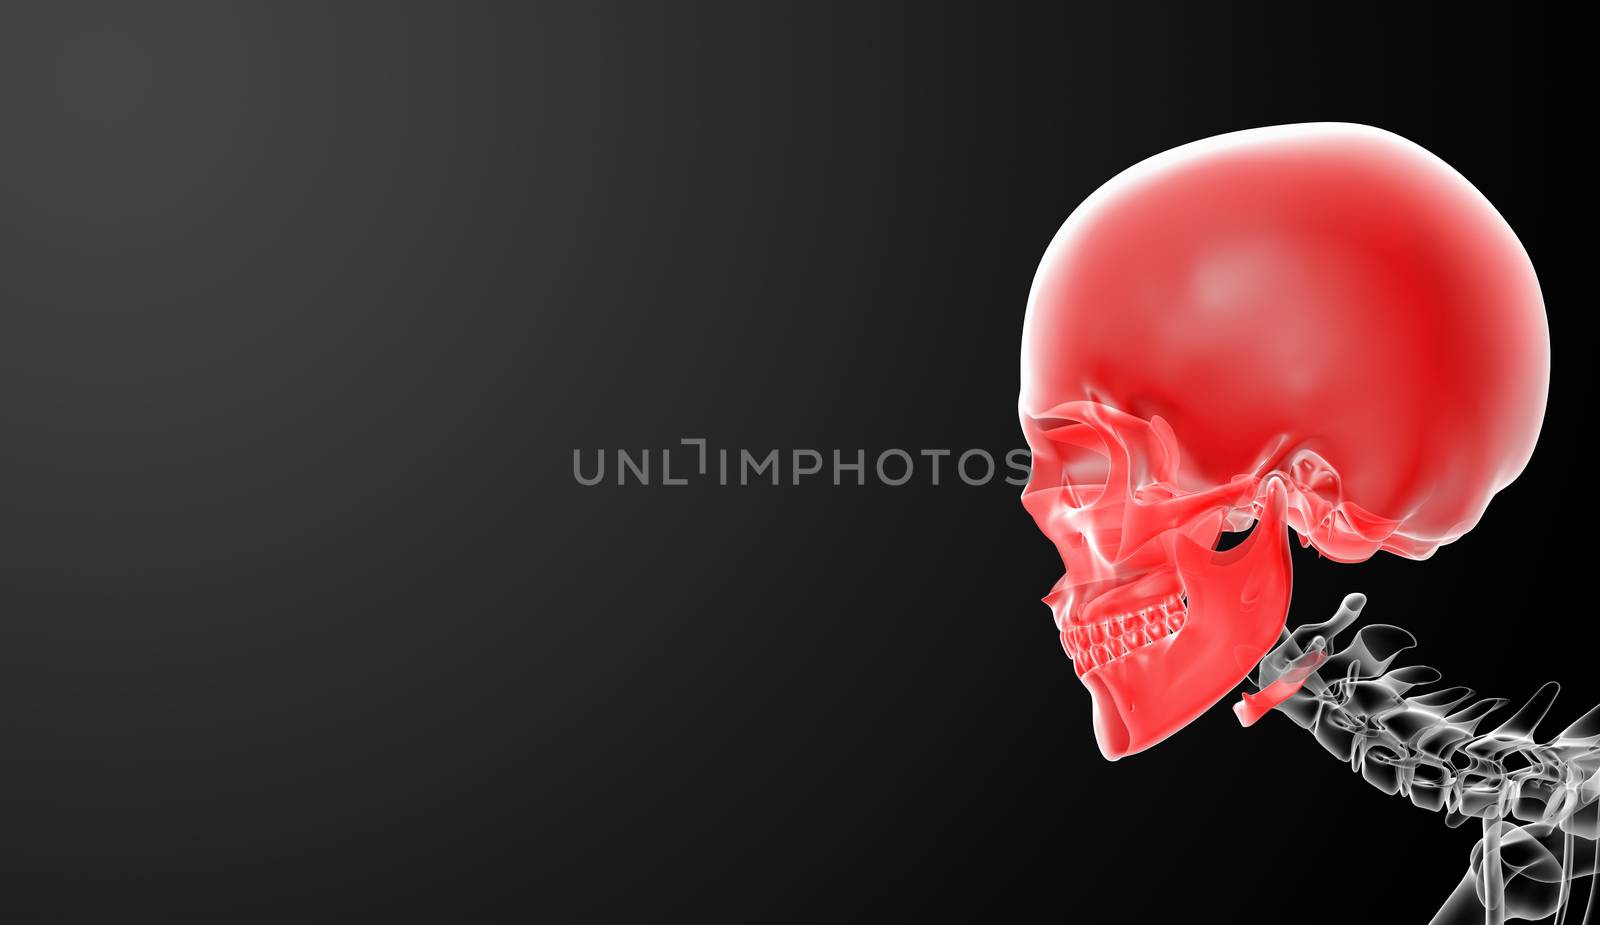 3d render skull on black background - side view by maya2008